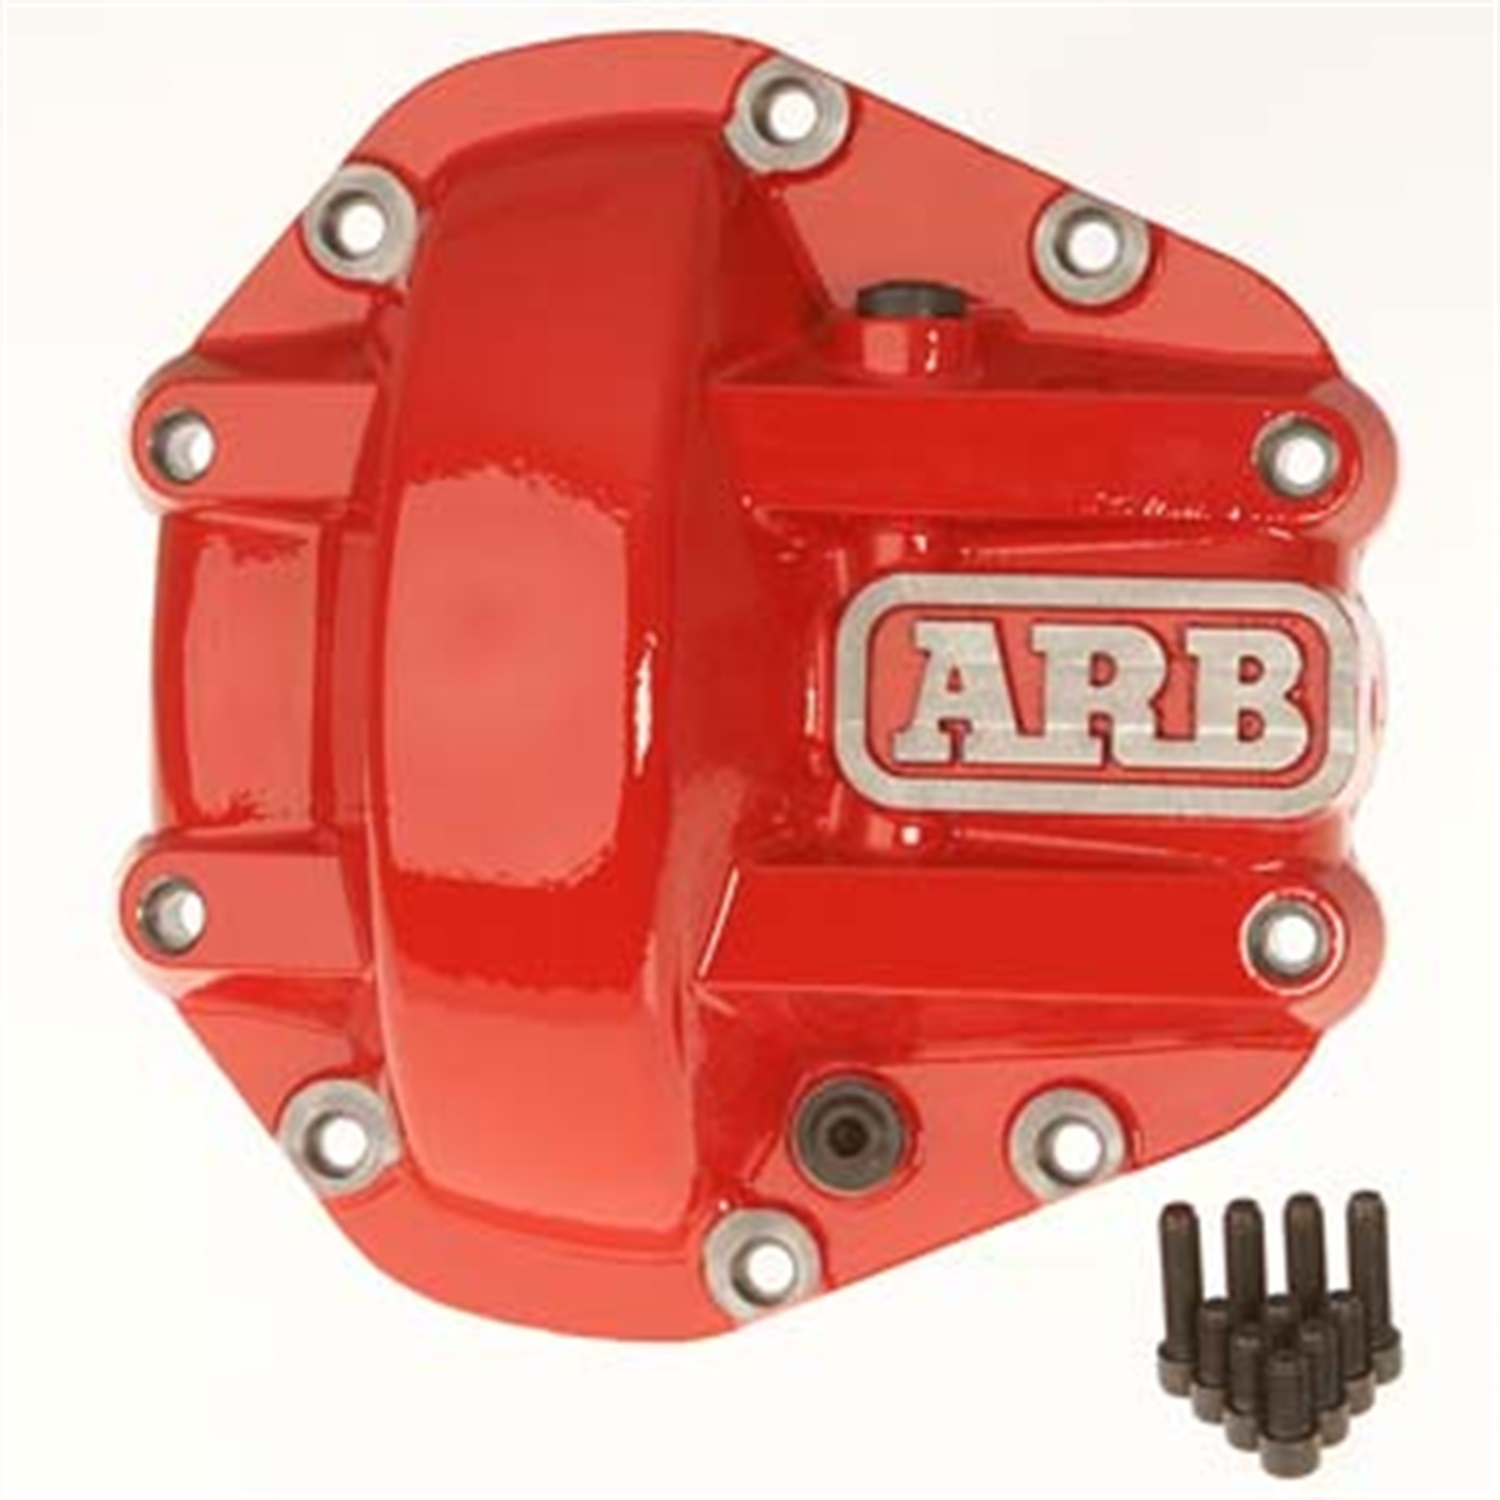 Show details for ARB 0750003 Arb Differential Cover